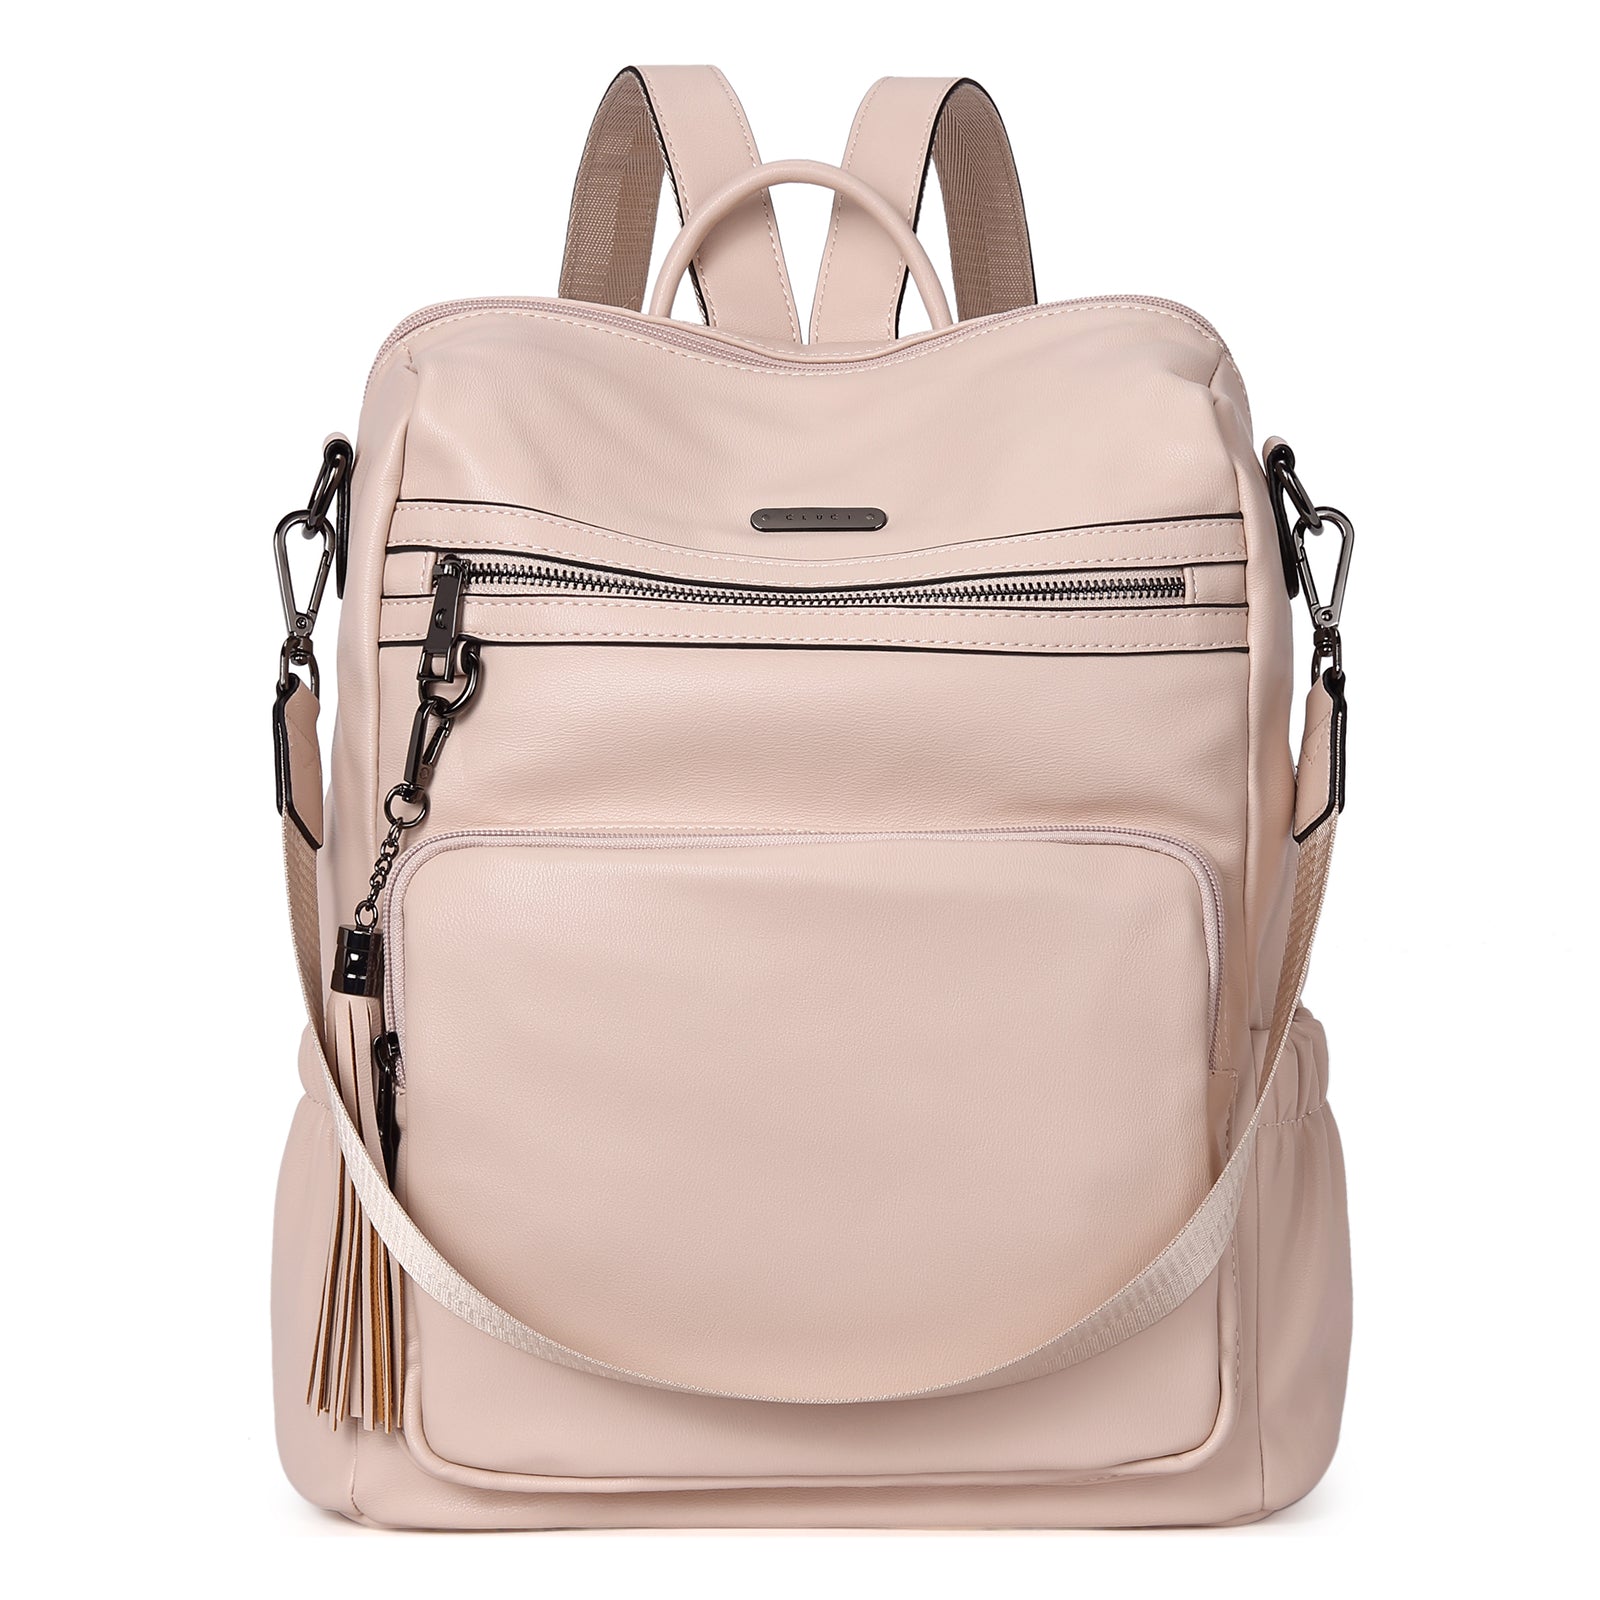 ✨🌺✨Louis Vuitton✨🌺✨ classic handbag backpacks single bag